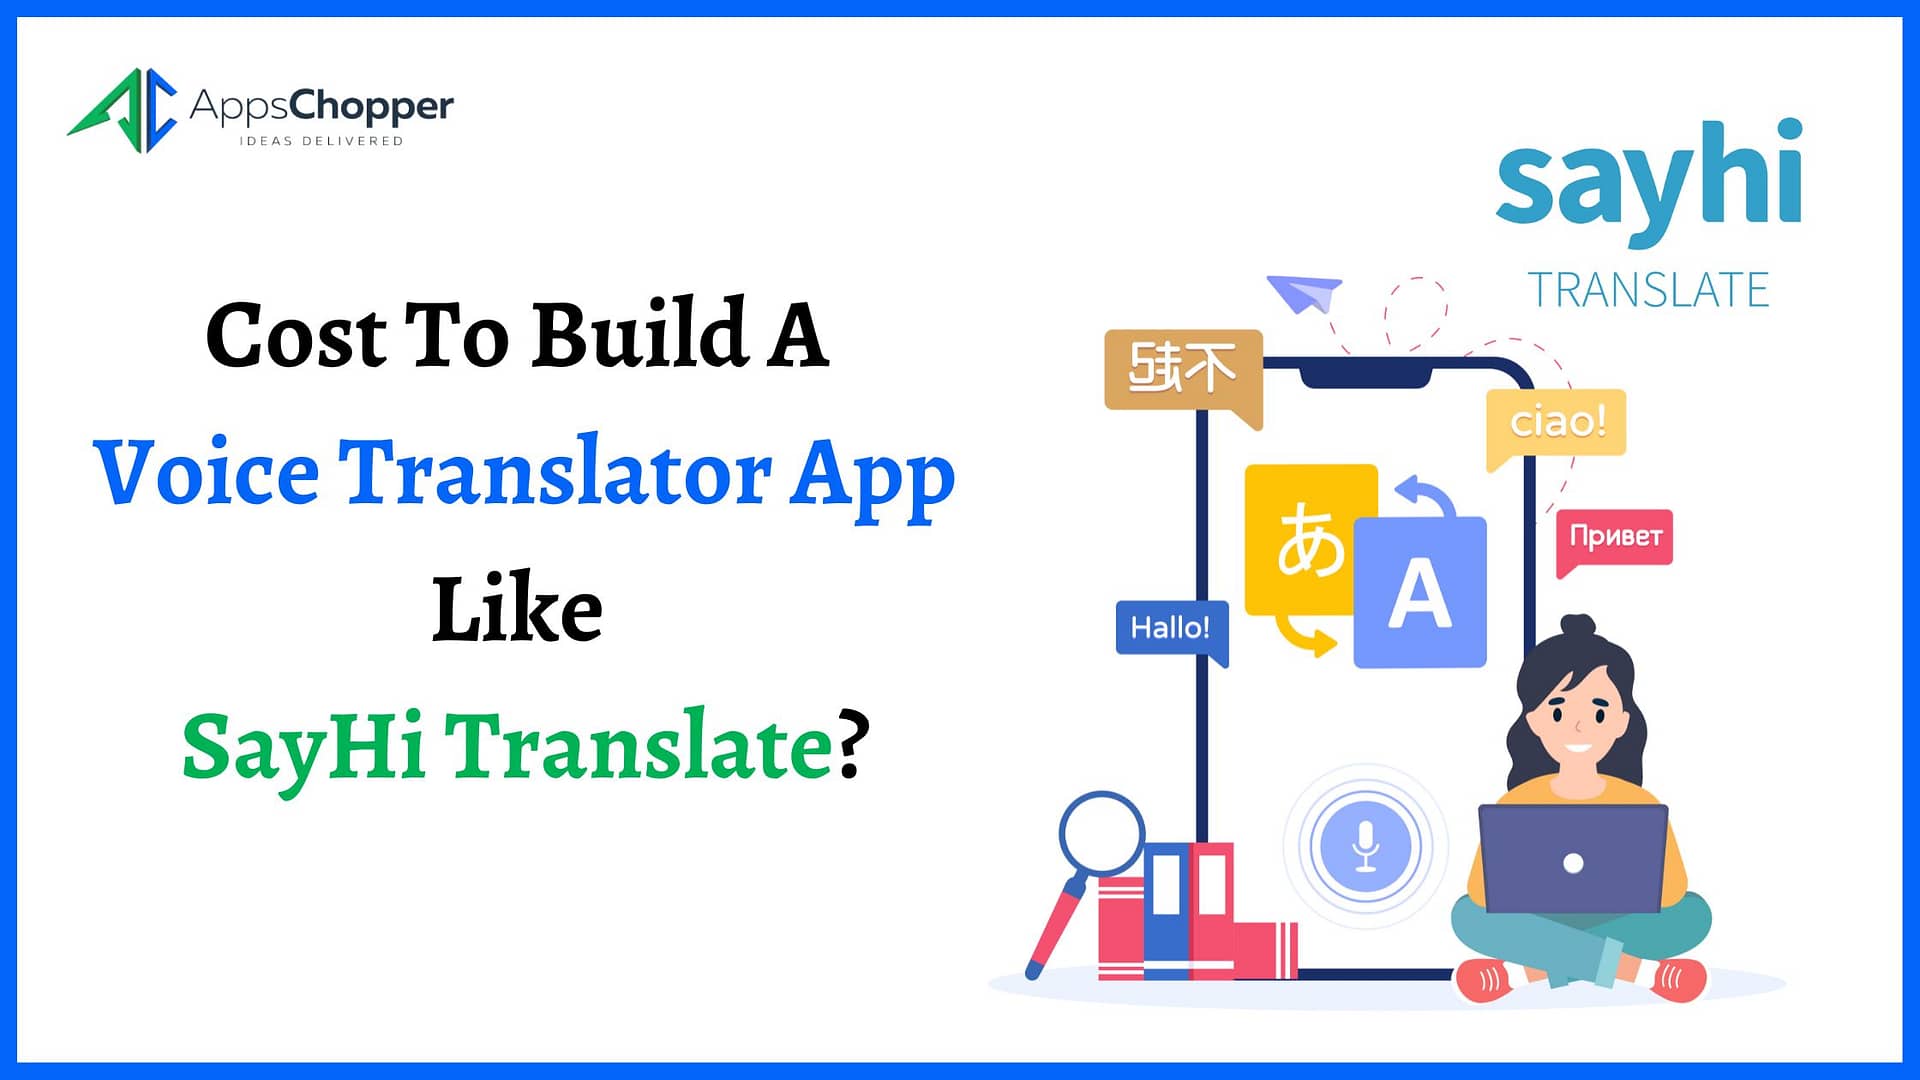 Cost To Build A Voice Translator App Like SayHi Translate?